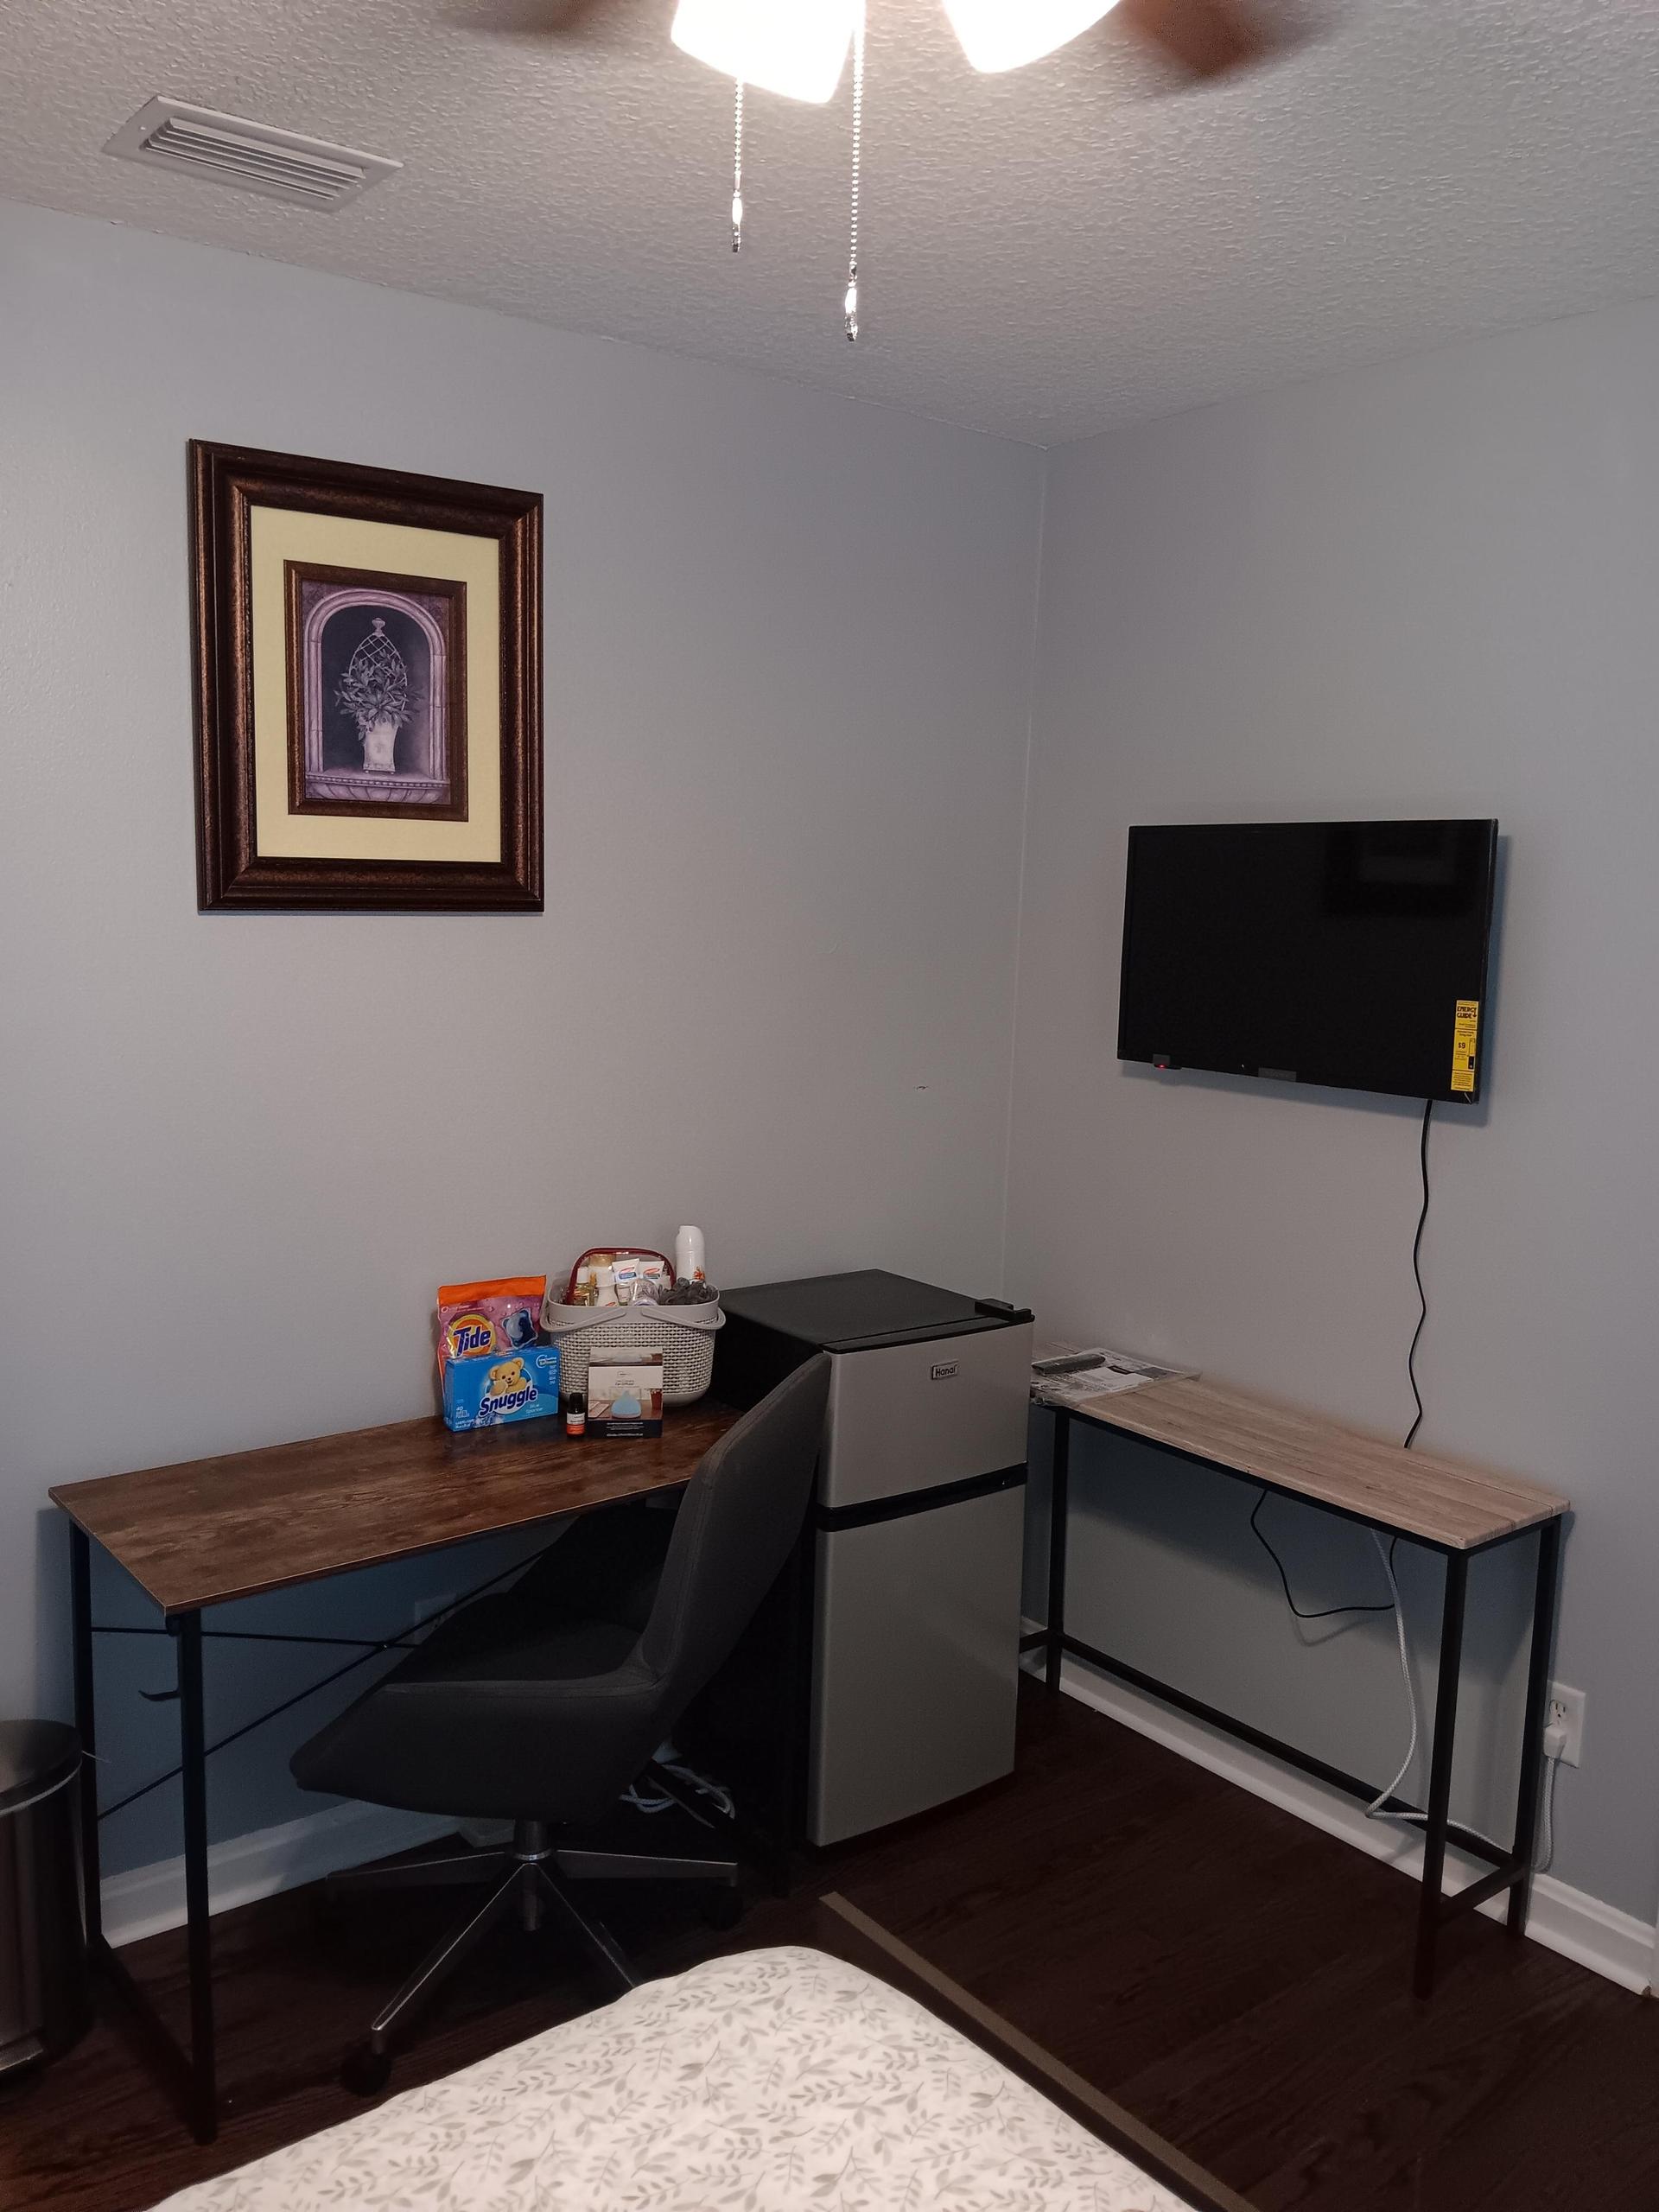 Work Desk Mini Fridge & Smart TV Included